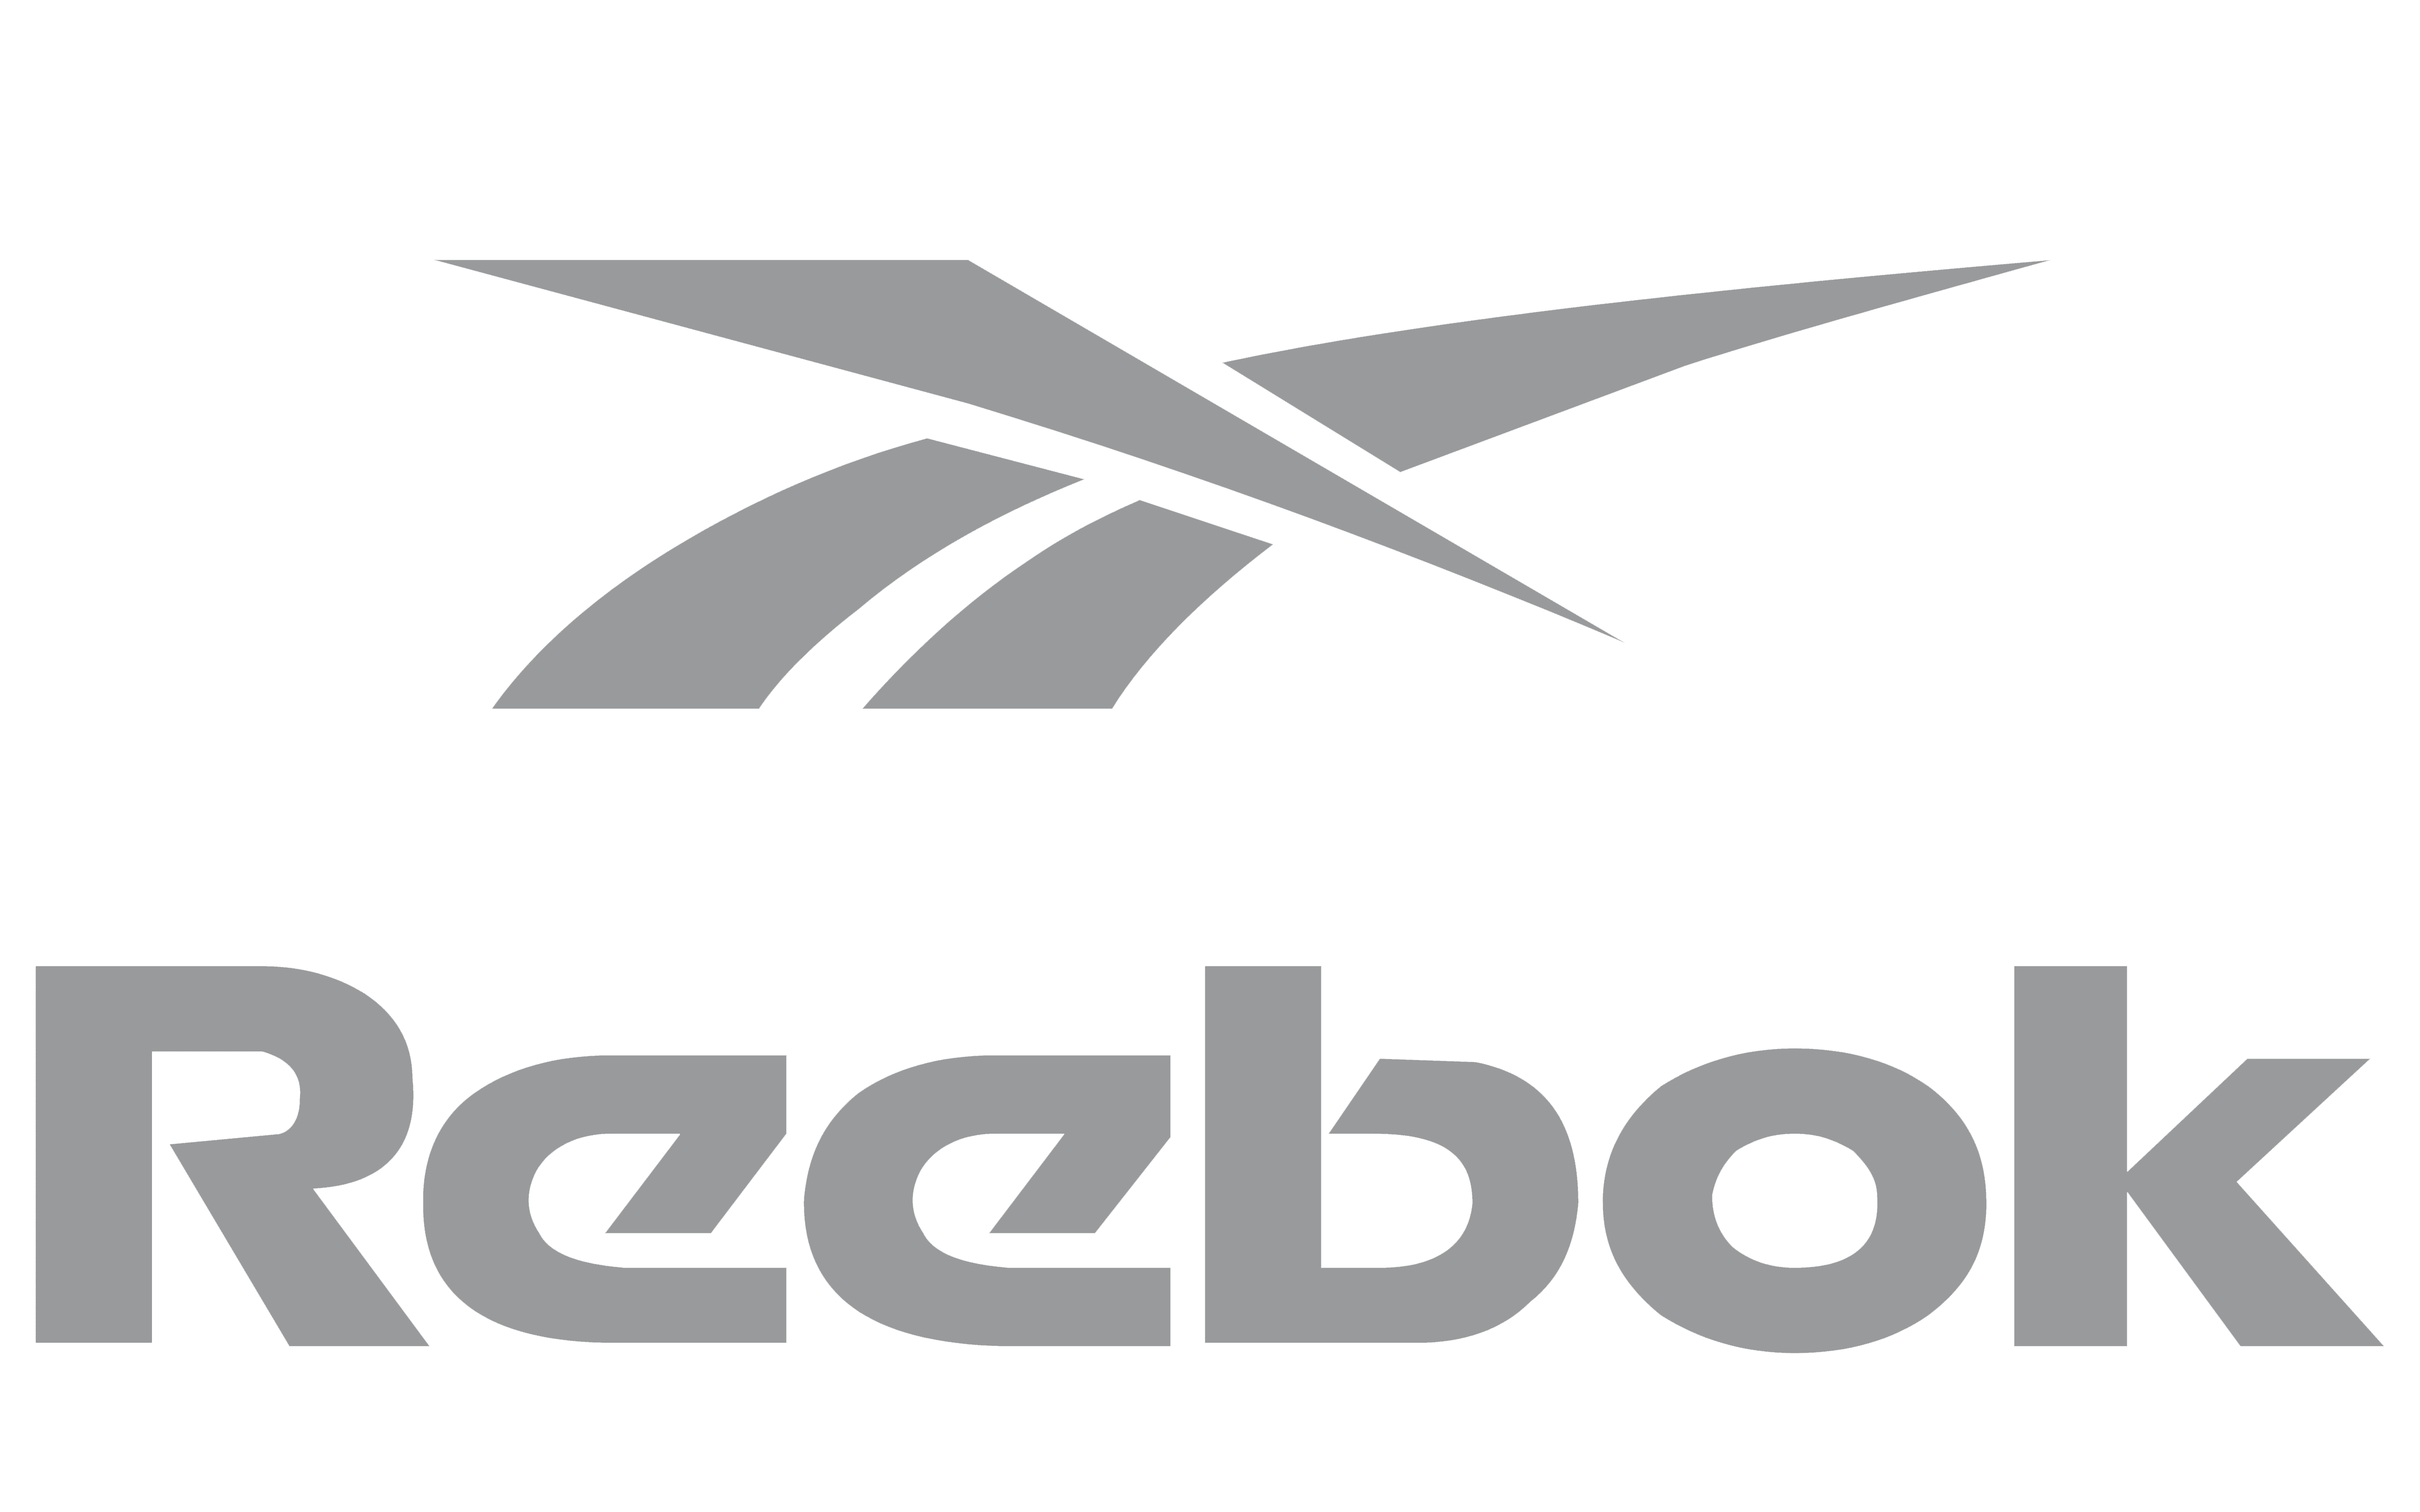 Reebok Text Effect and Logo Design Brand